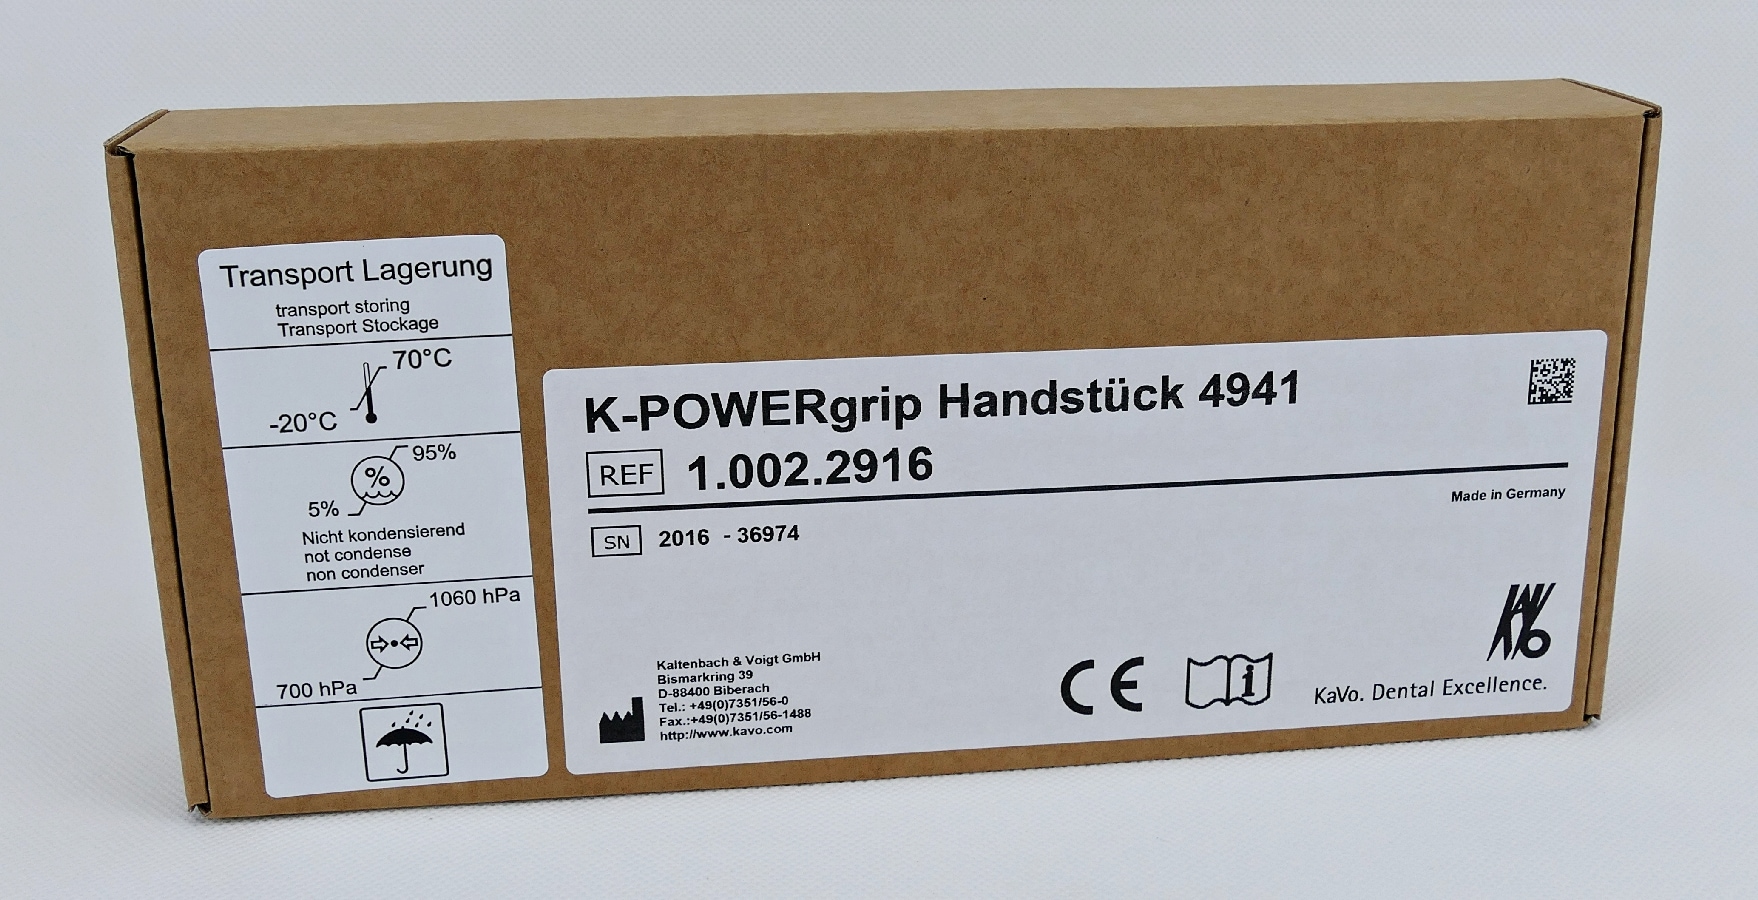 Kavo K-POWERgrip Handstycke 4941